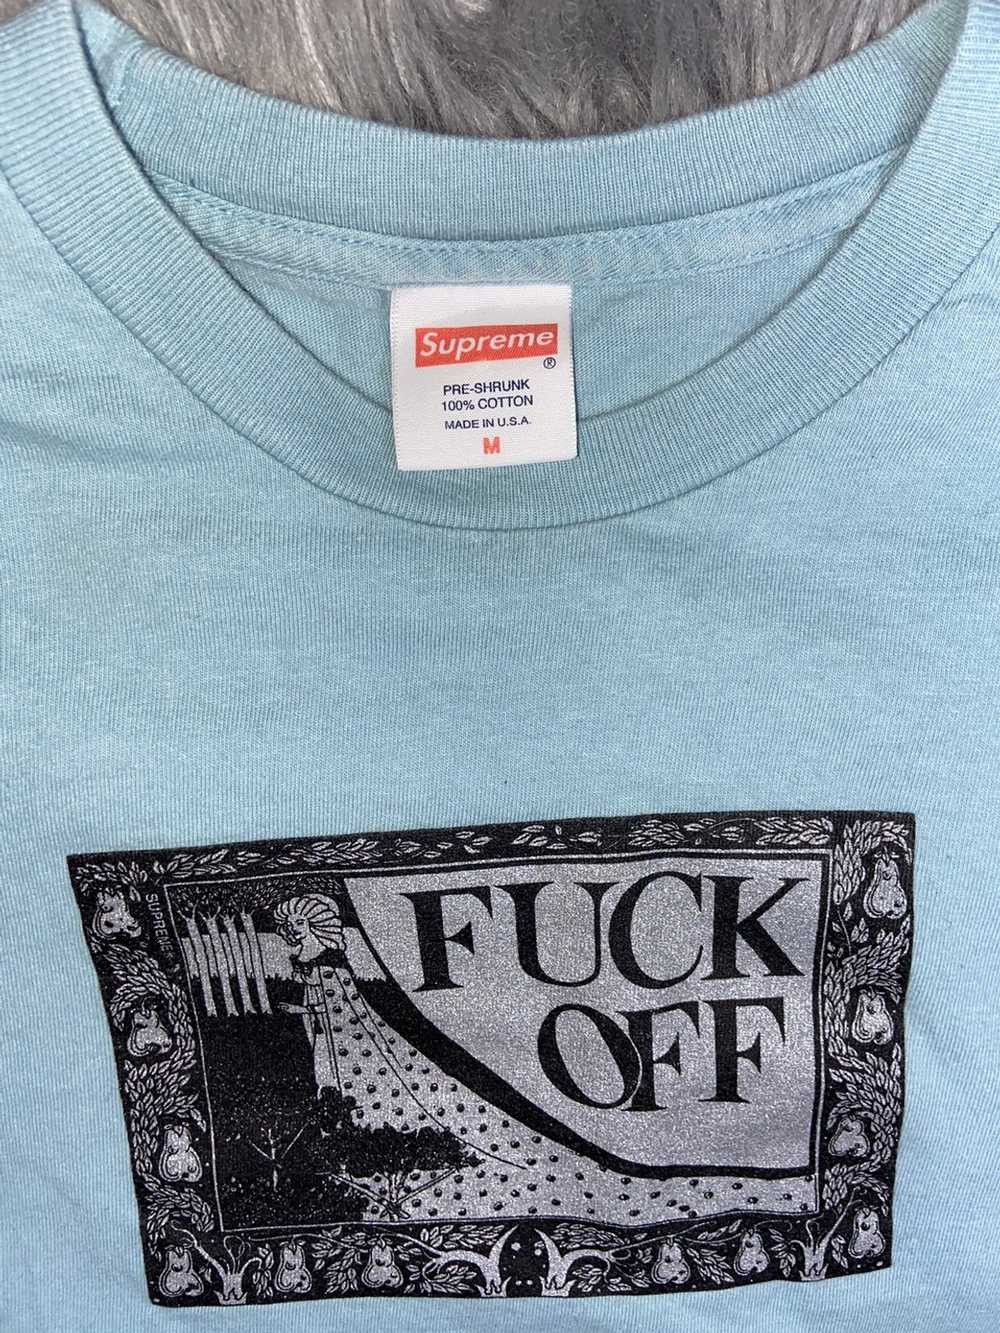 Supreme Fuck off t shirt - image 2